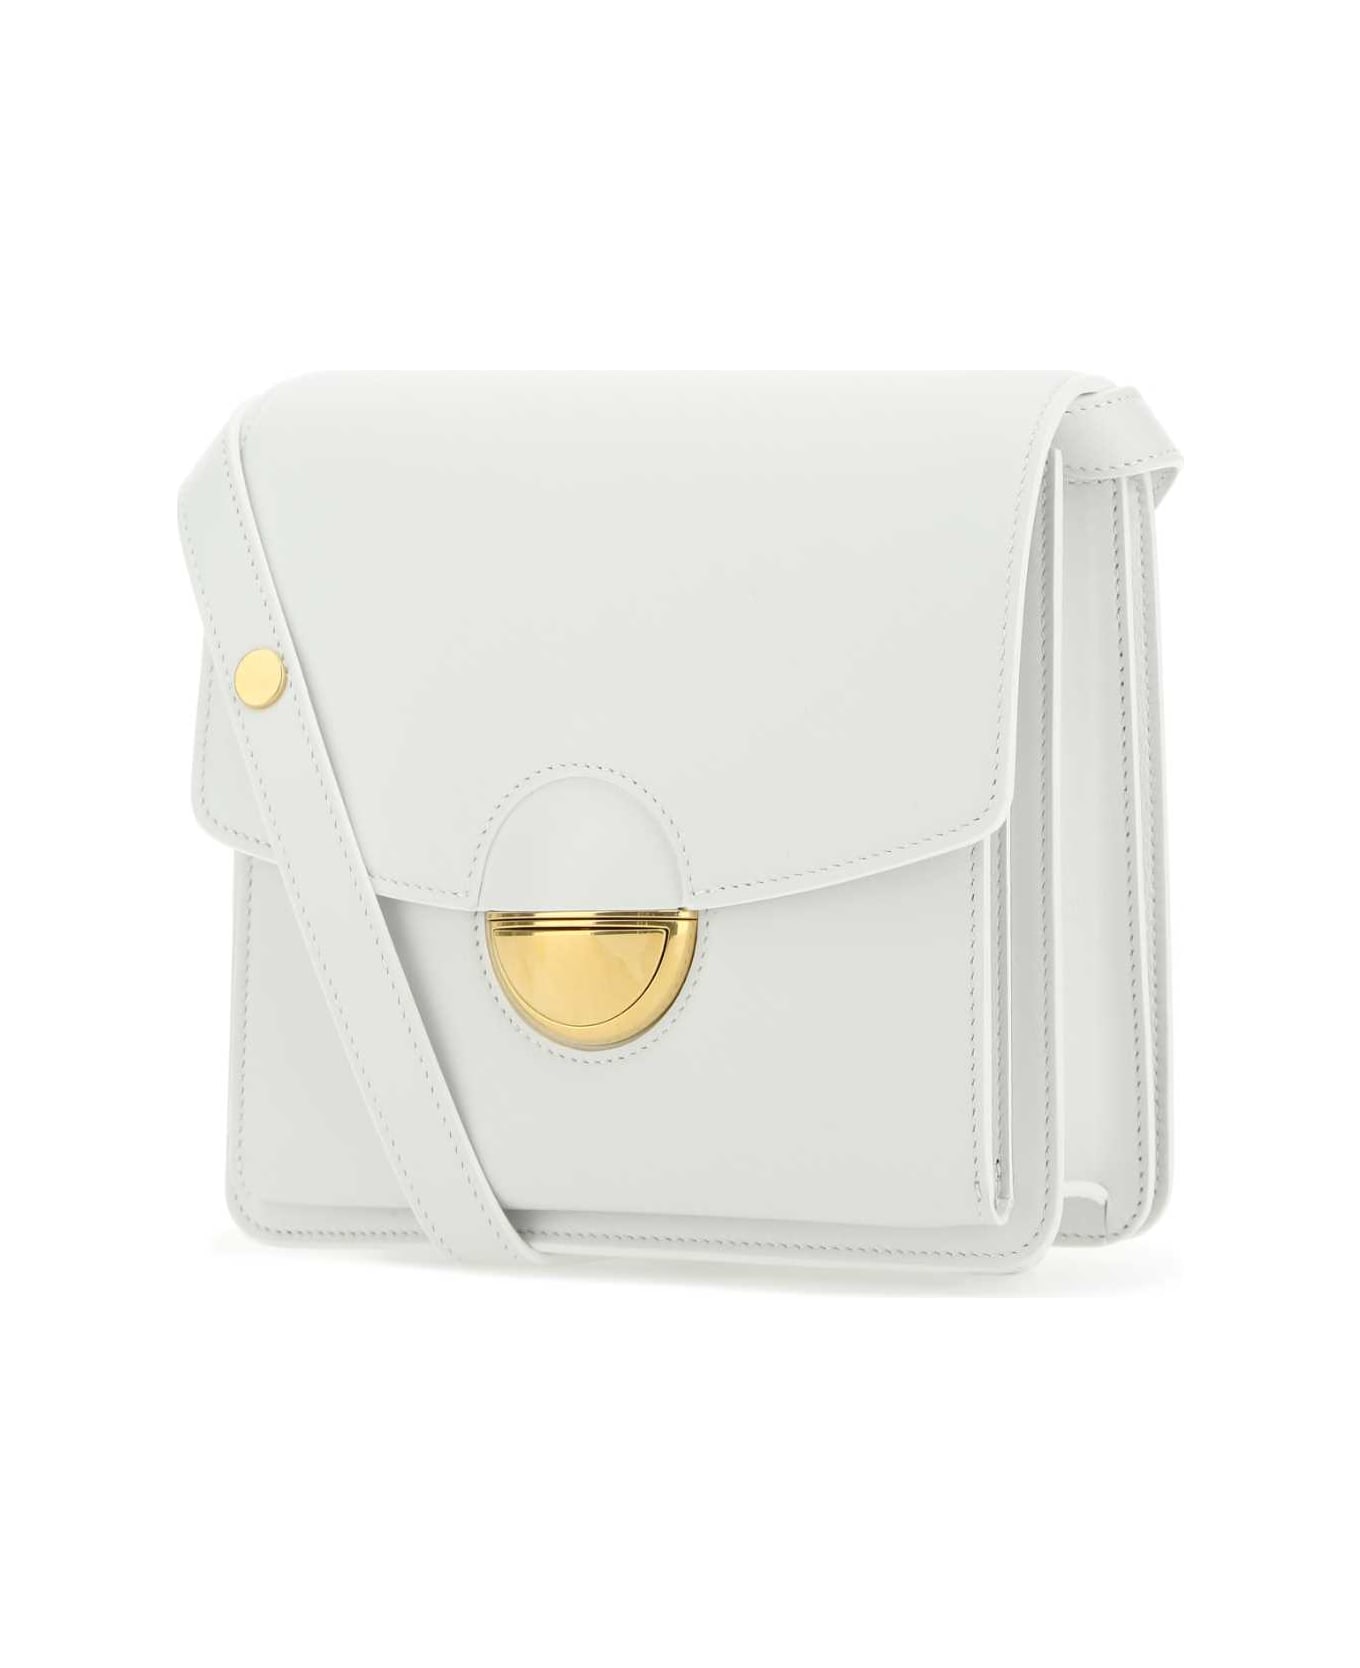 Proenza Schouler White Leather Dia Shoulder Bag - 104